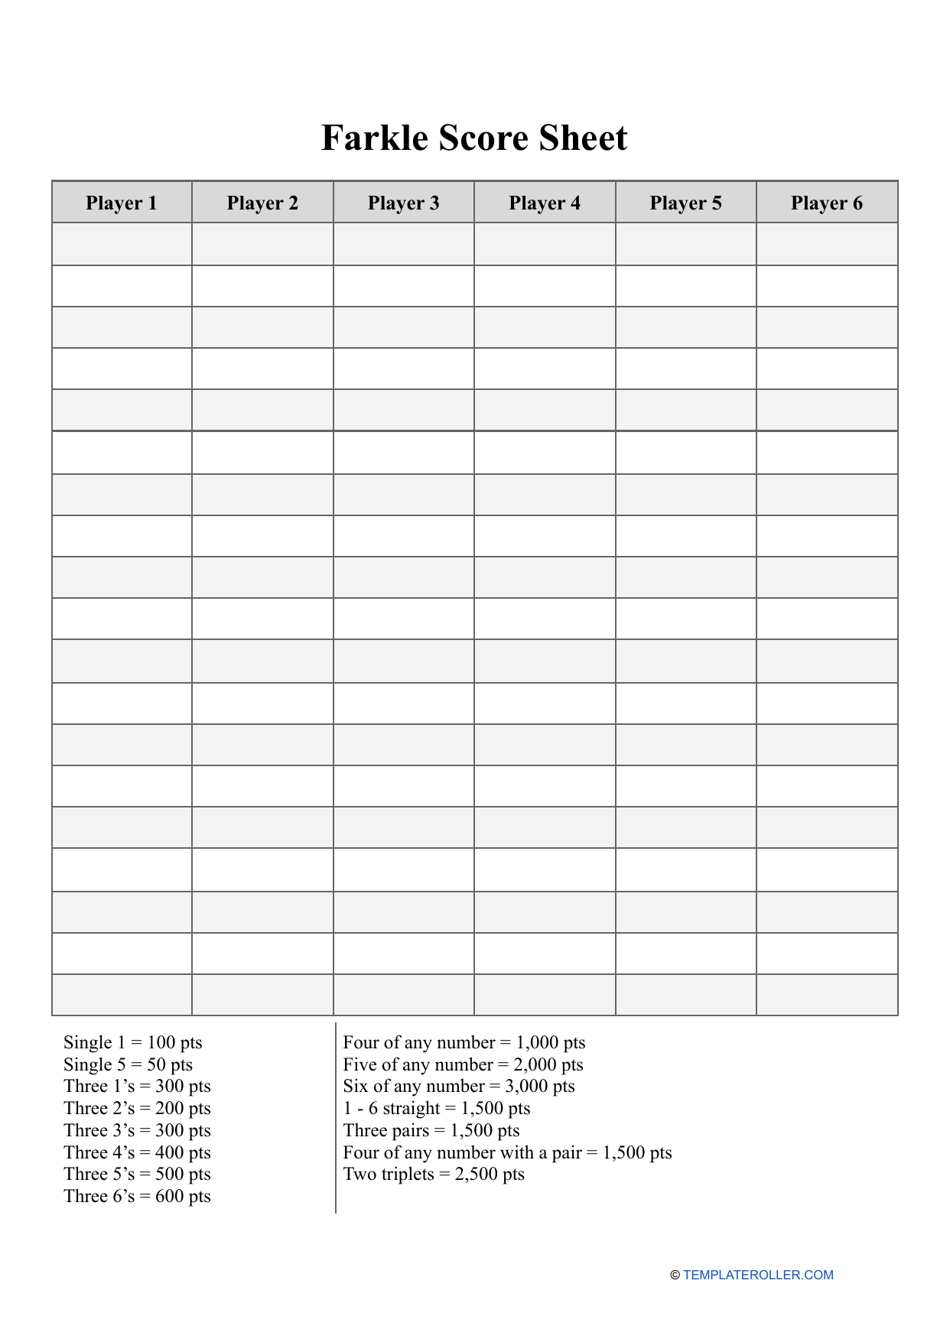 Farkle Score Sheet Template - Printable Document